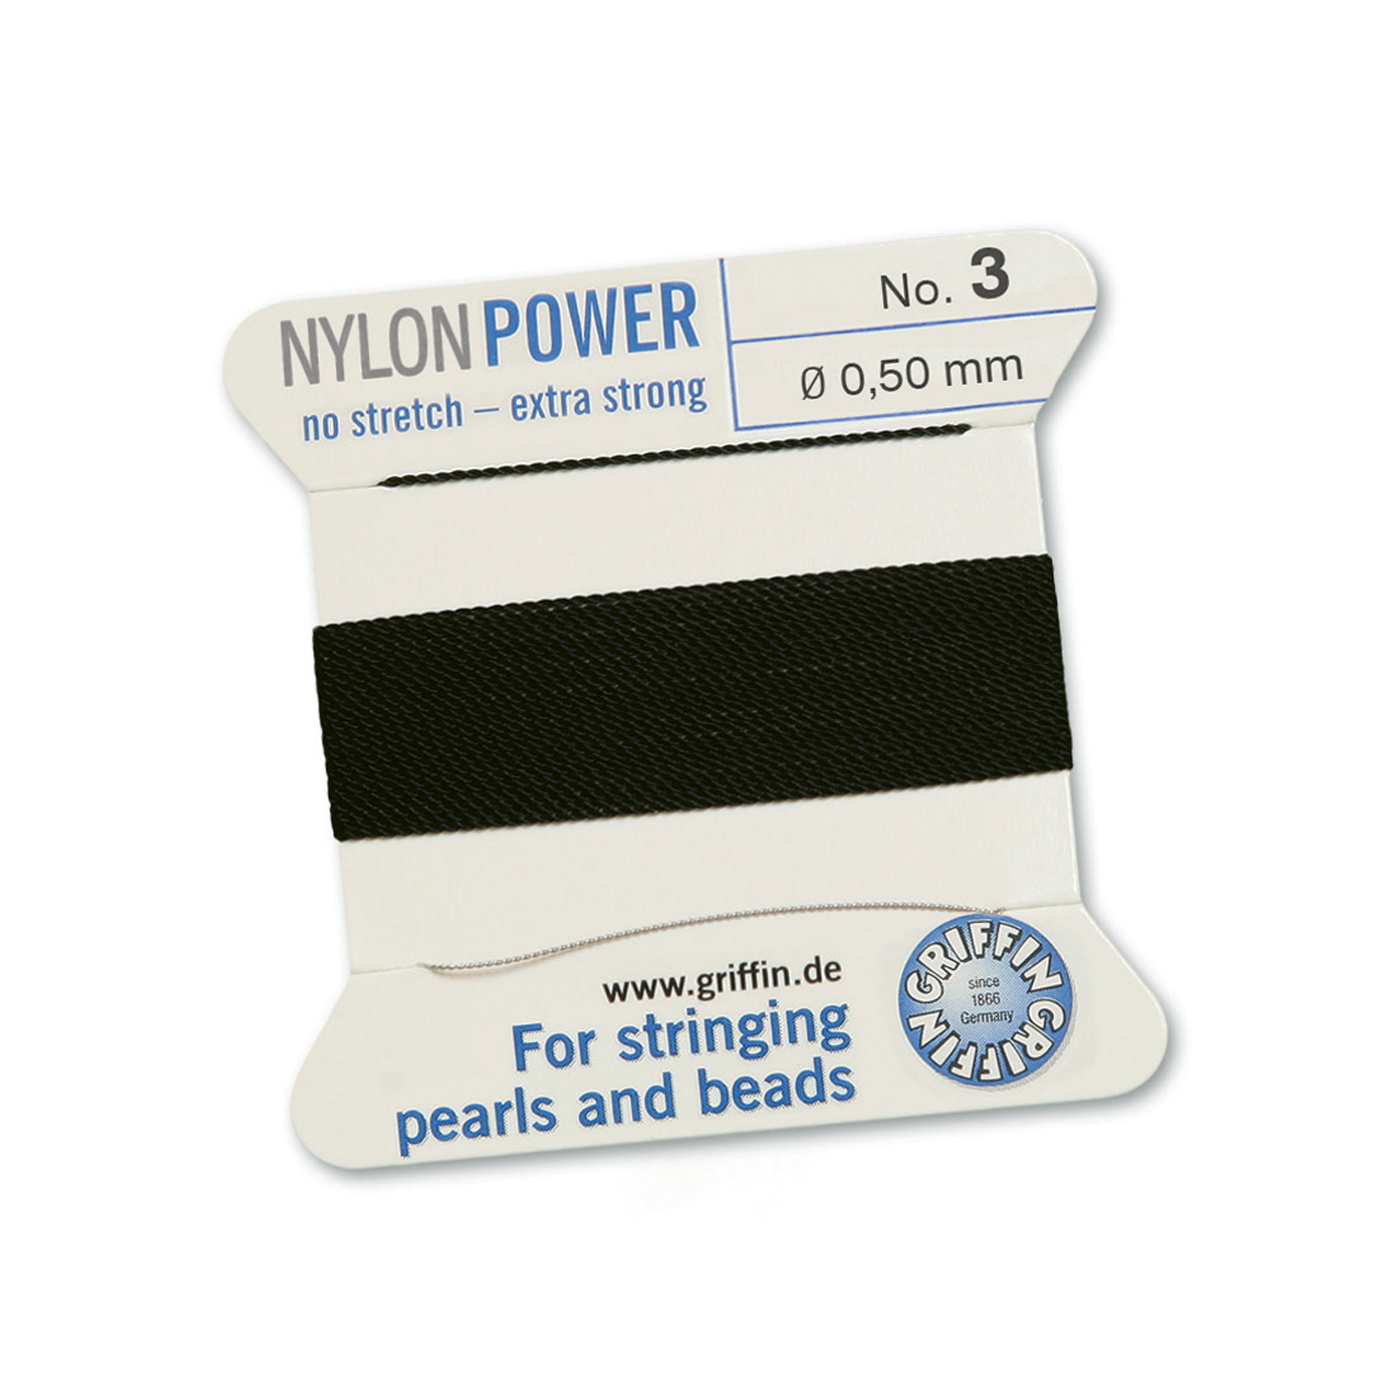 Bead Cord NylonPower, Black, No. 3 - 2 m